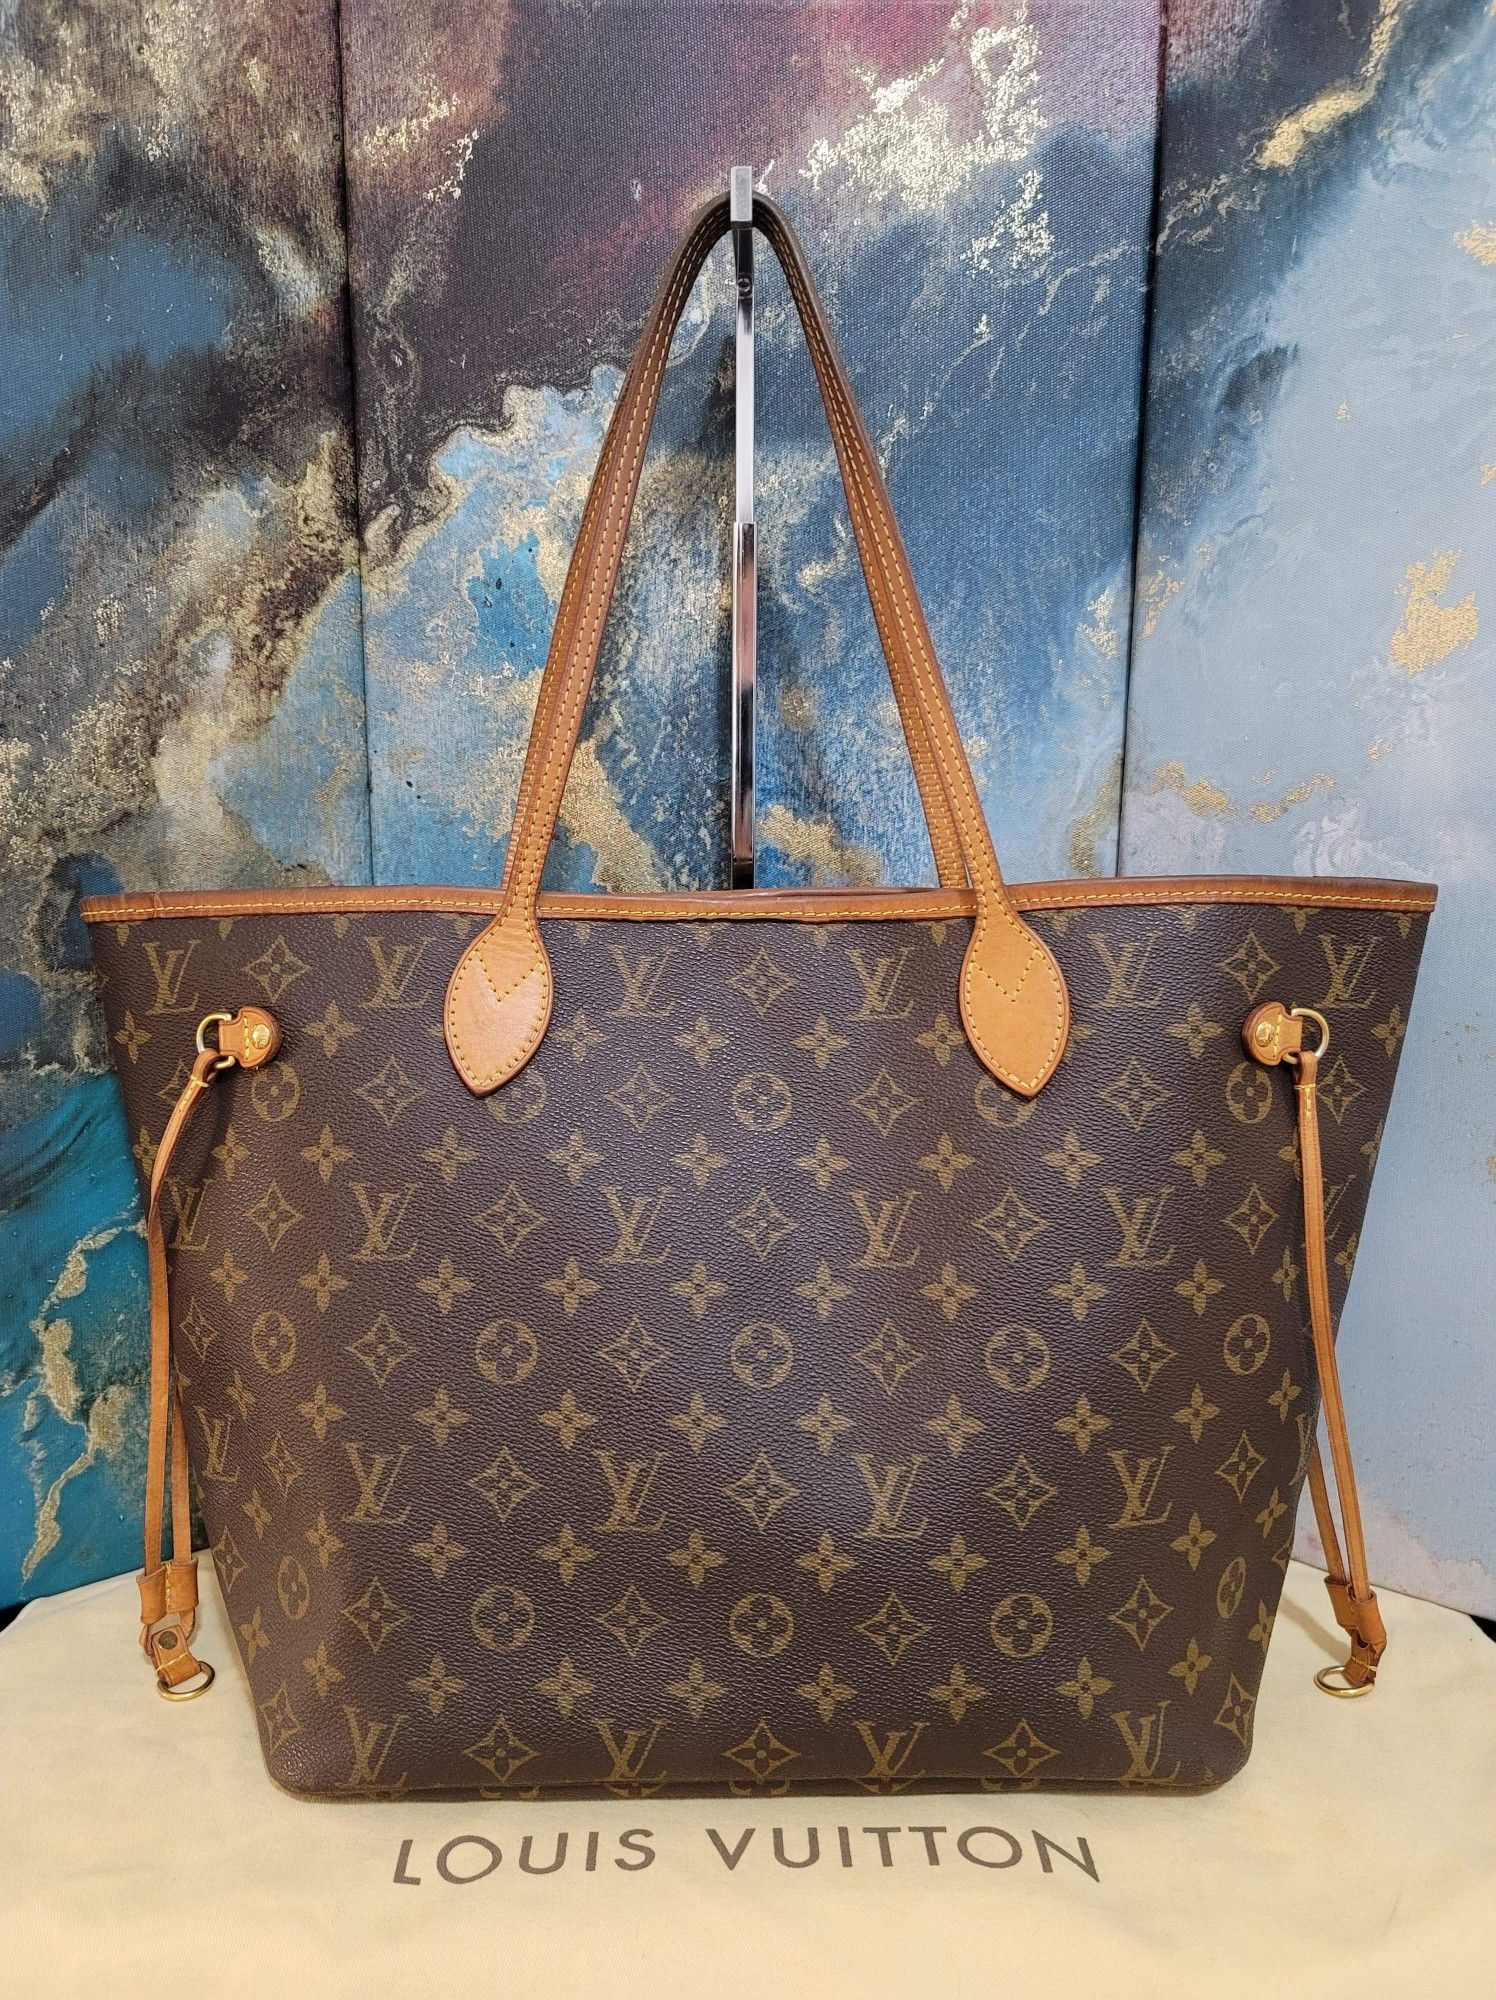 Authentic Louis Vuitton Neverfull MM Tote / Shoulder Bag